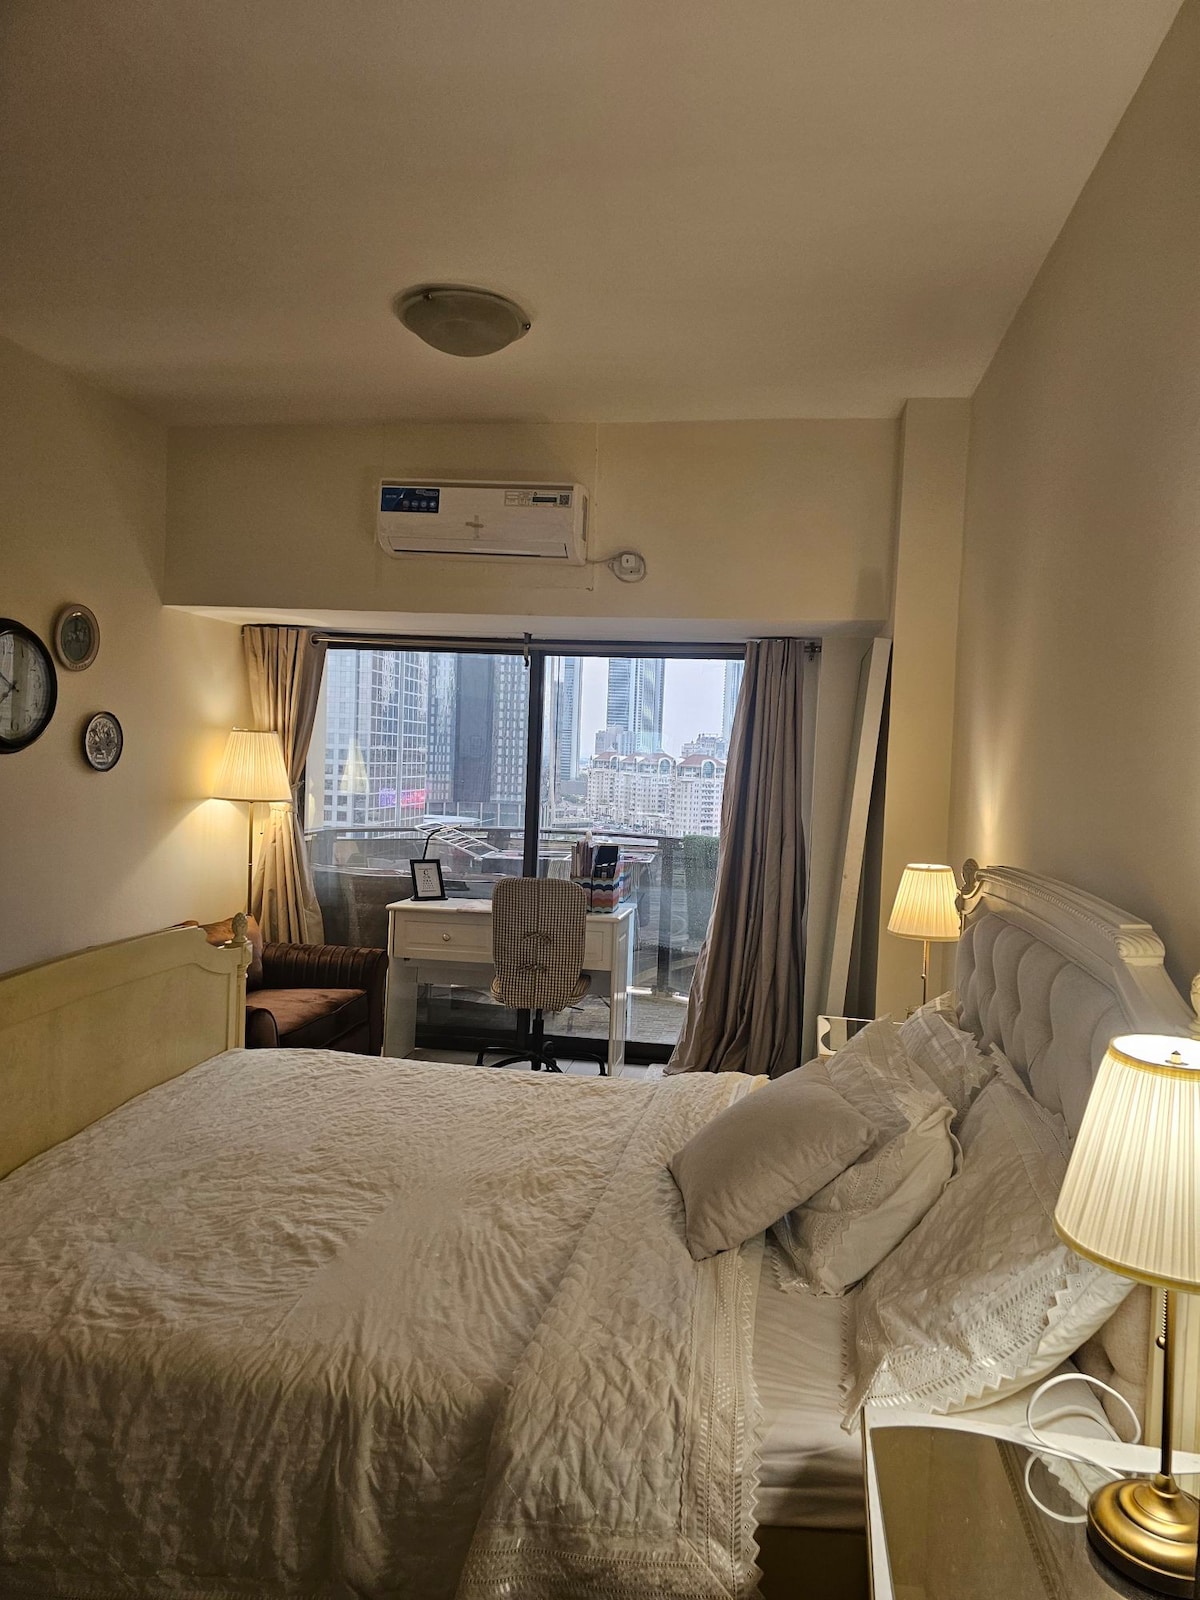 Room with burj khalifa view